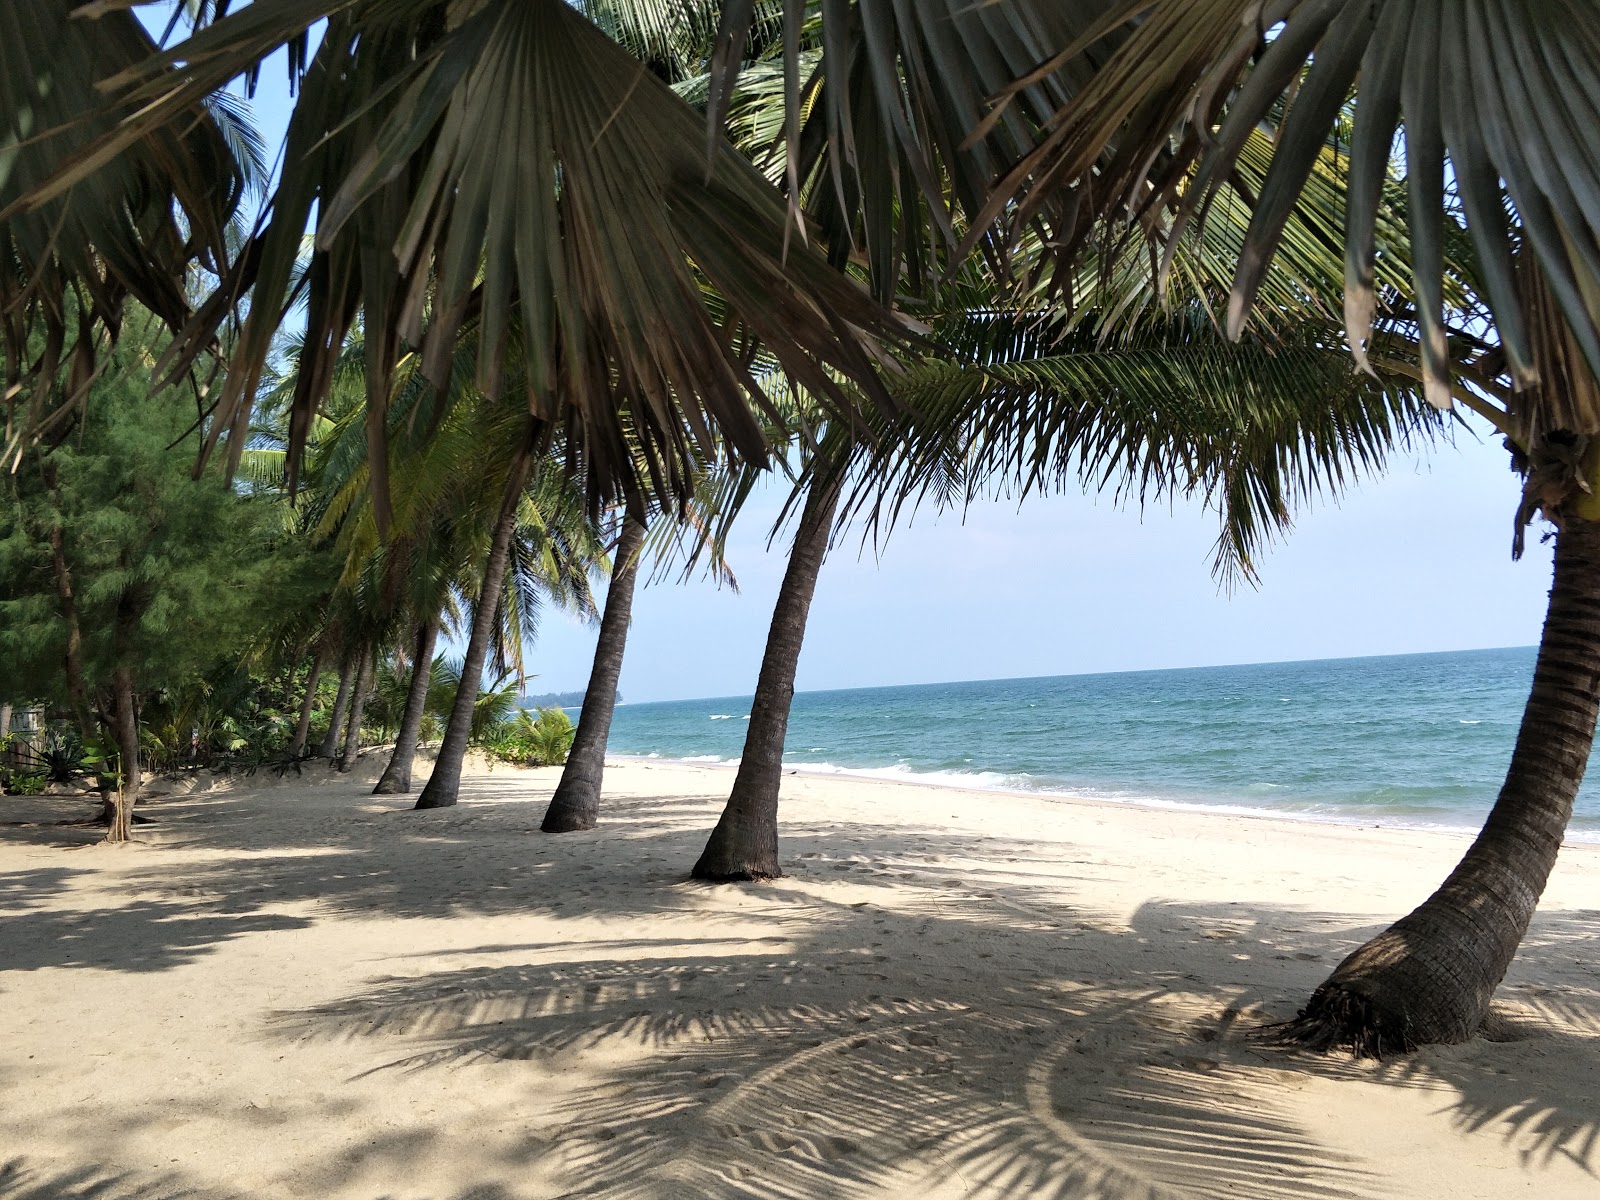 Photo of Lamkum Beach - popular place among relax connoisseurs